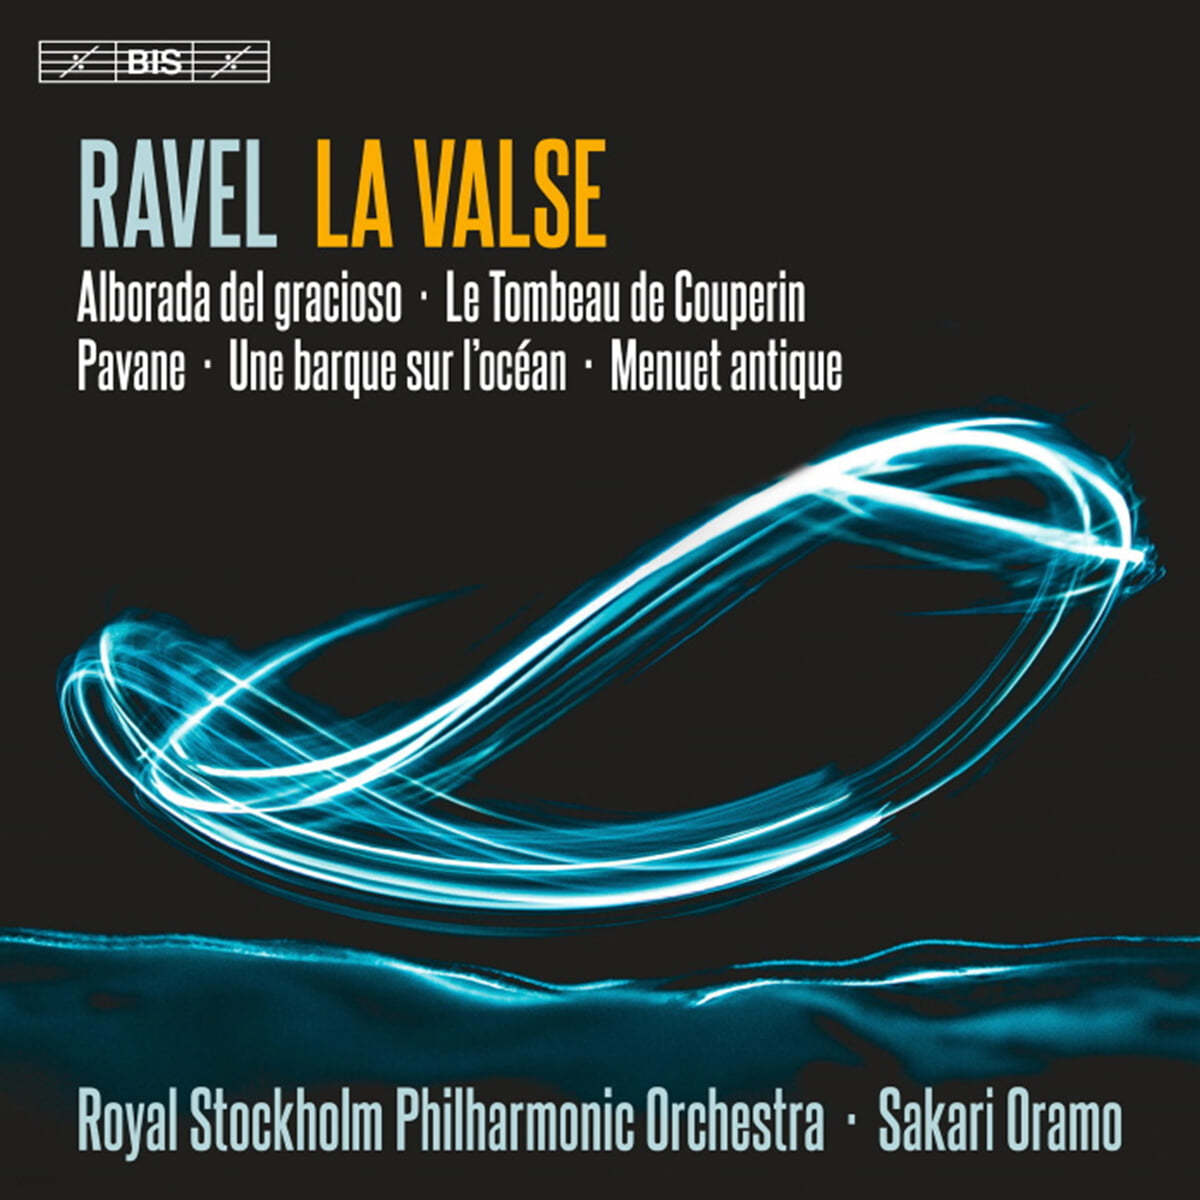 Sakari Oramo 라벨: 라 발스, 쿠프랭의 무덤, 어릿광대의 아침 노래 외 (Ravel: La Valse, Le Tombeau de Couperin, Alborada del gracioso) 